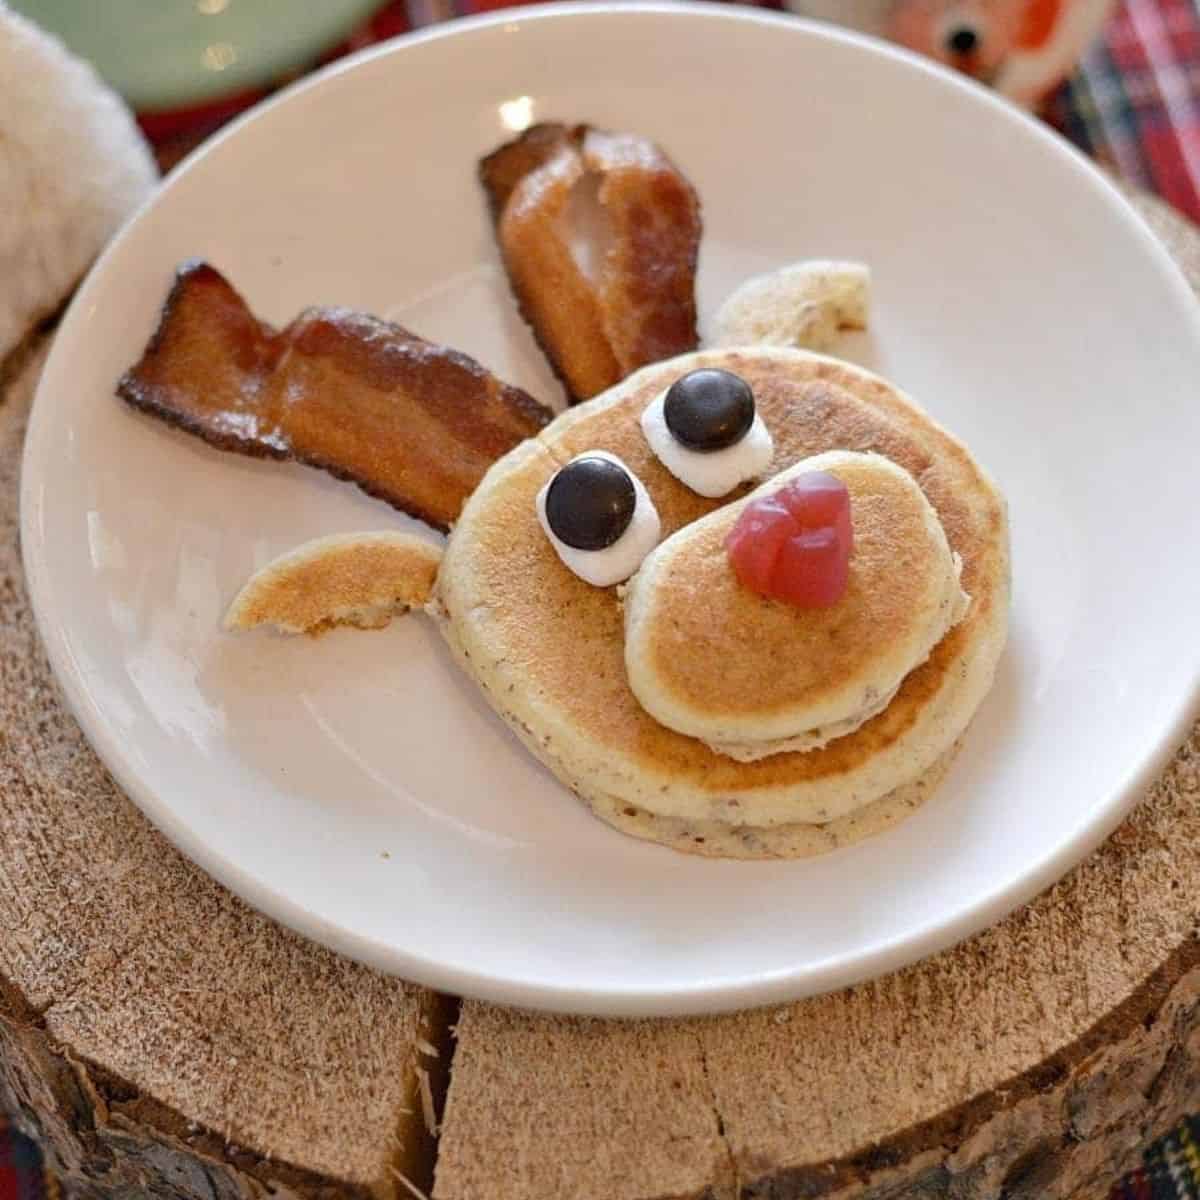 Reindeer Pancakes (so cute!) - This Vivacious Life